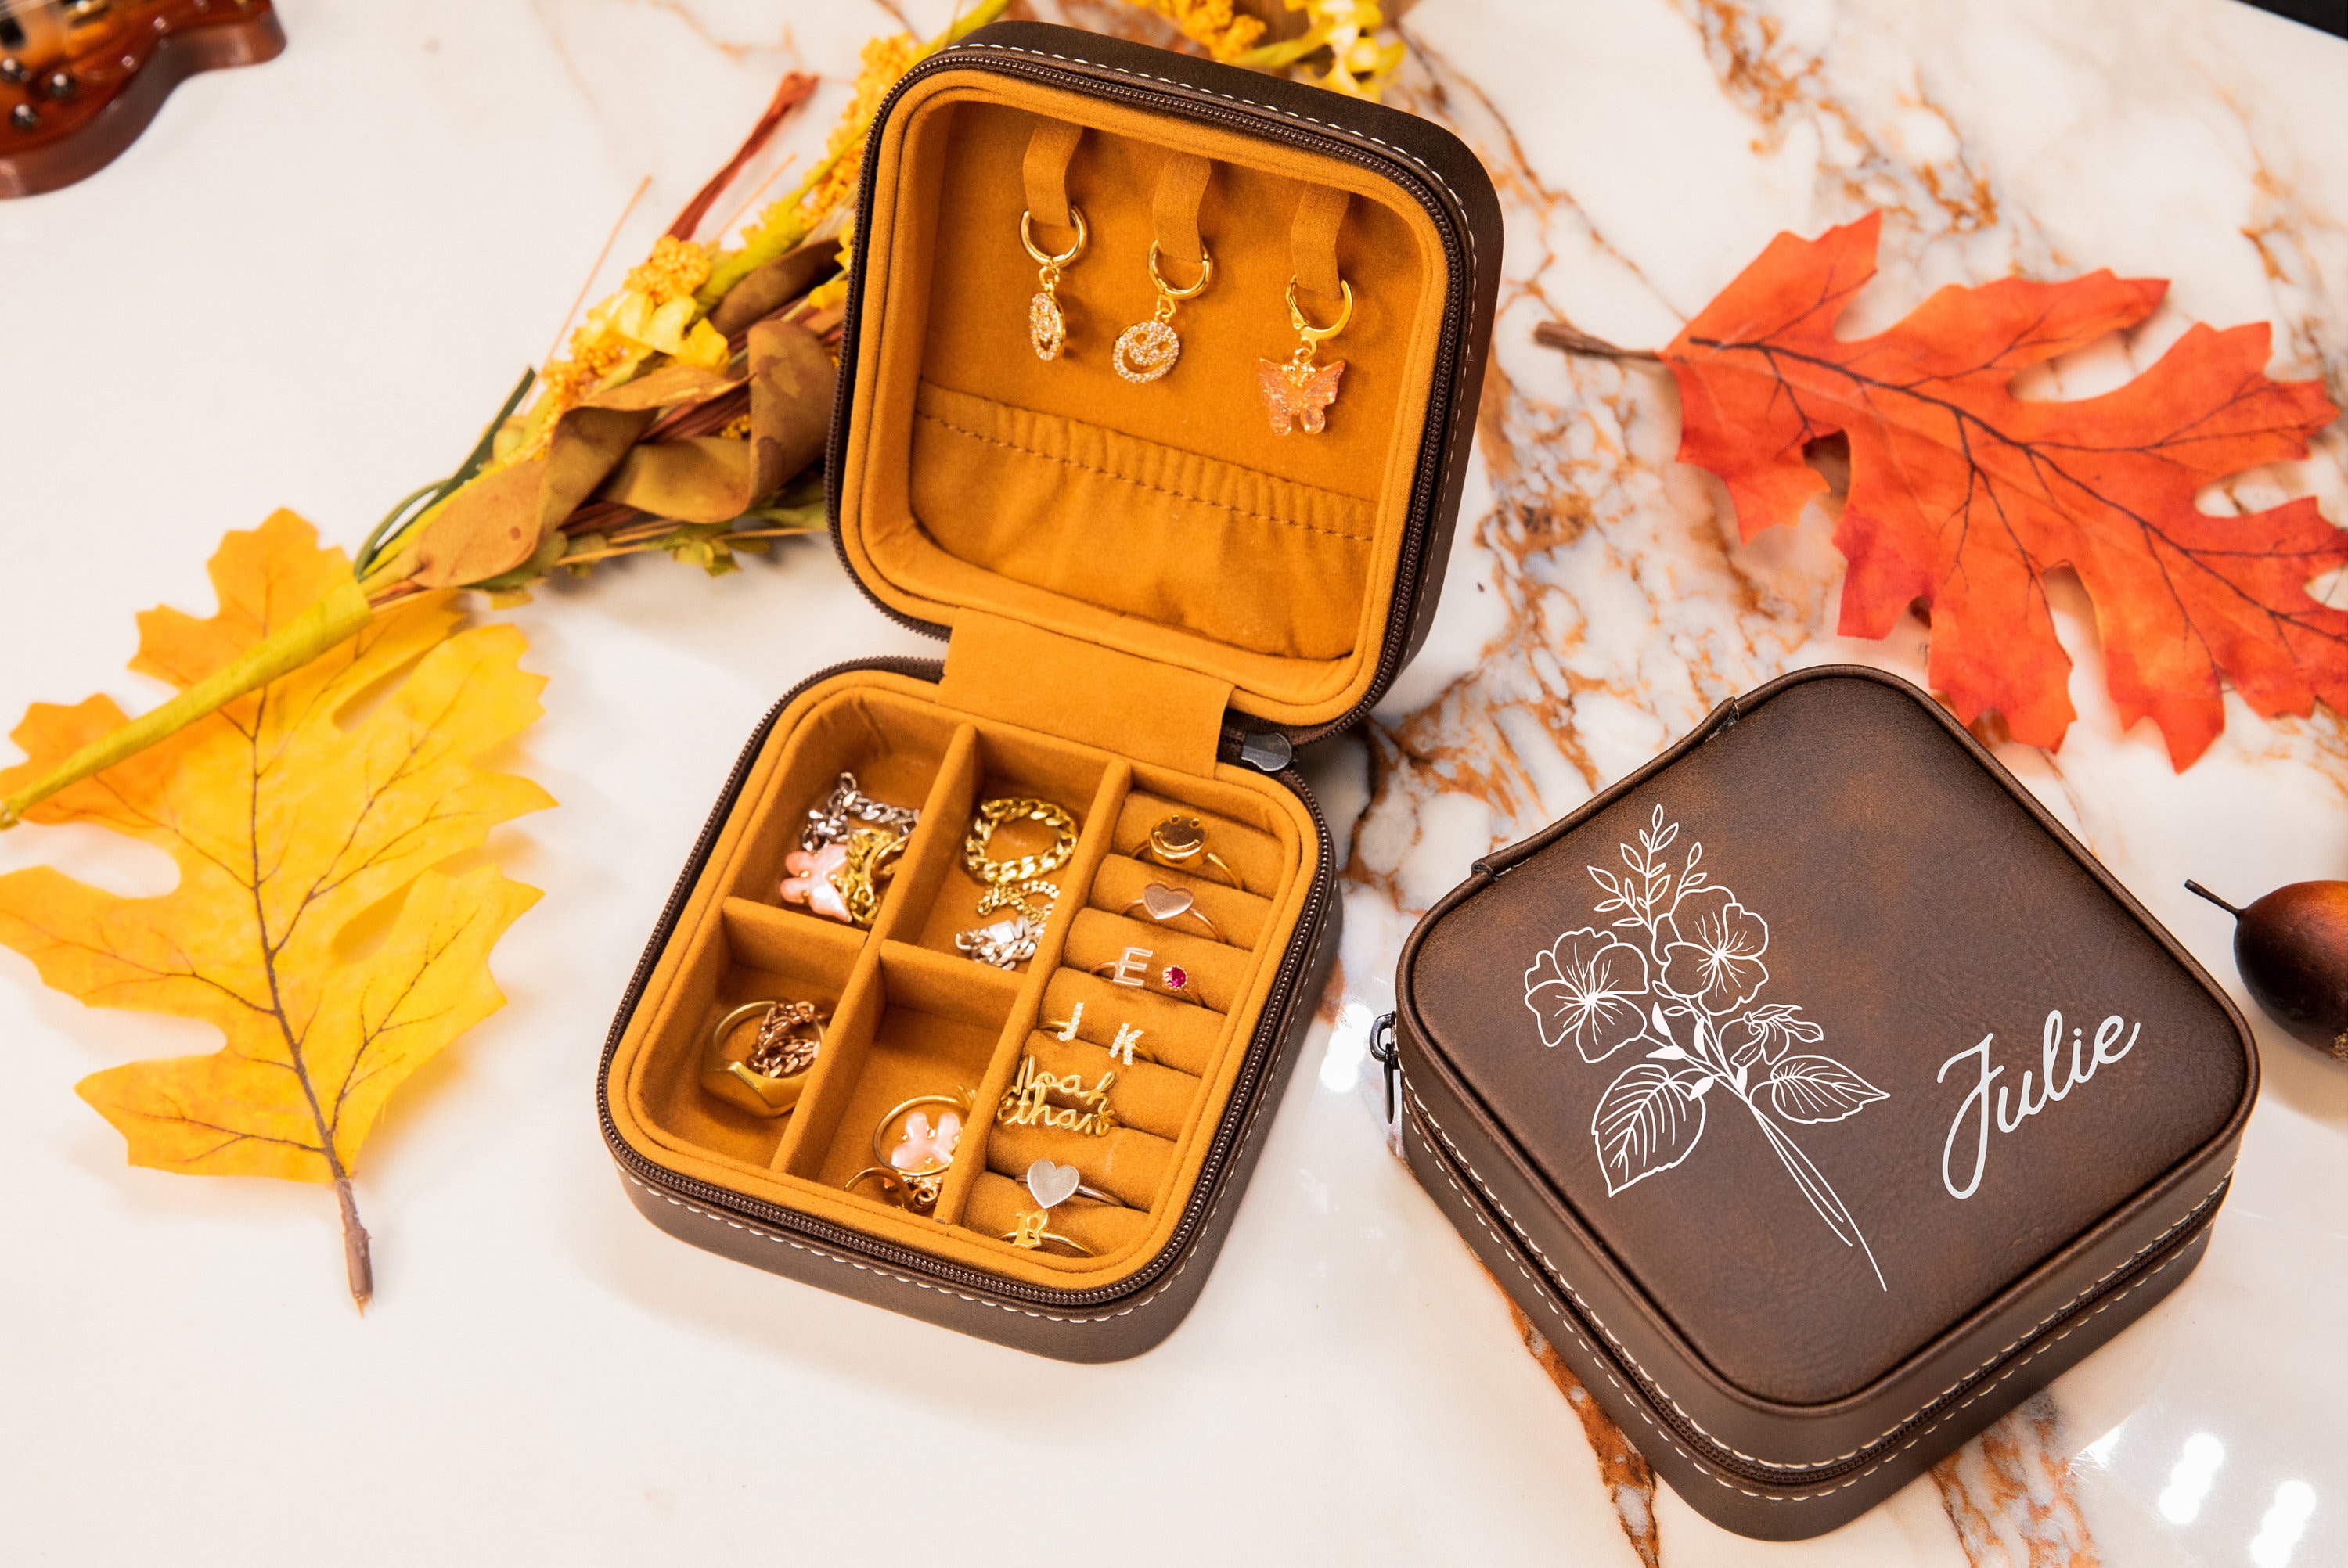 17Dec Speckles Mini Travel Jewelry Box Jewelry Case Organizer with Mirror  Travel Accessories Jewelry Holder Organizer,Bridesmaid Proposal Gift Ring